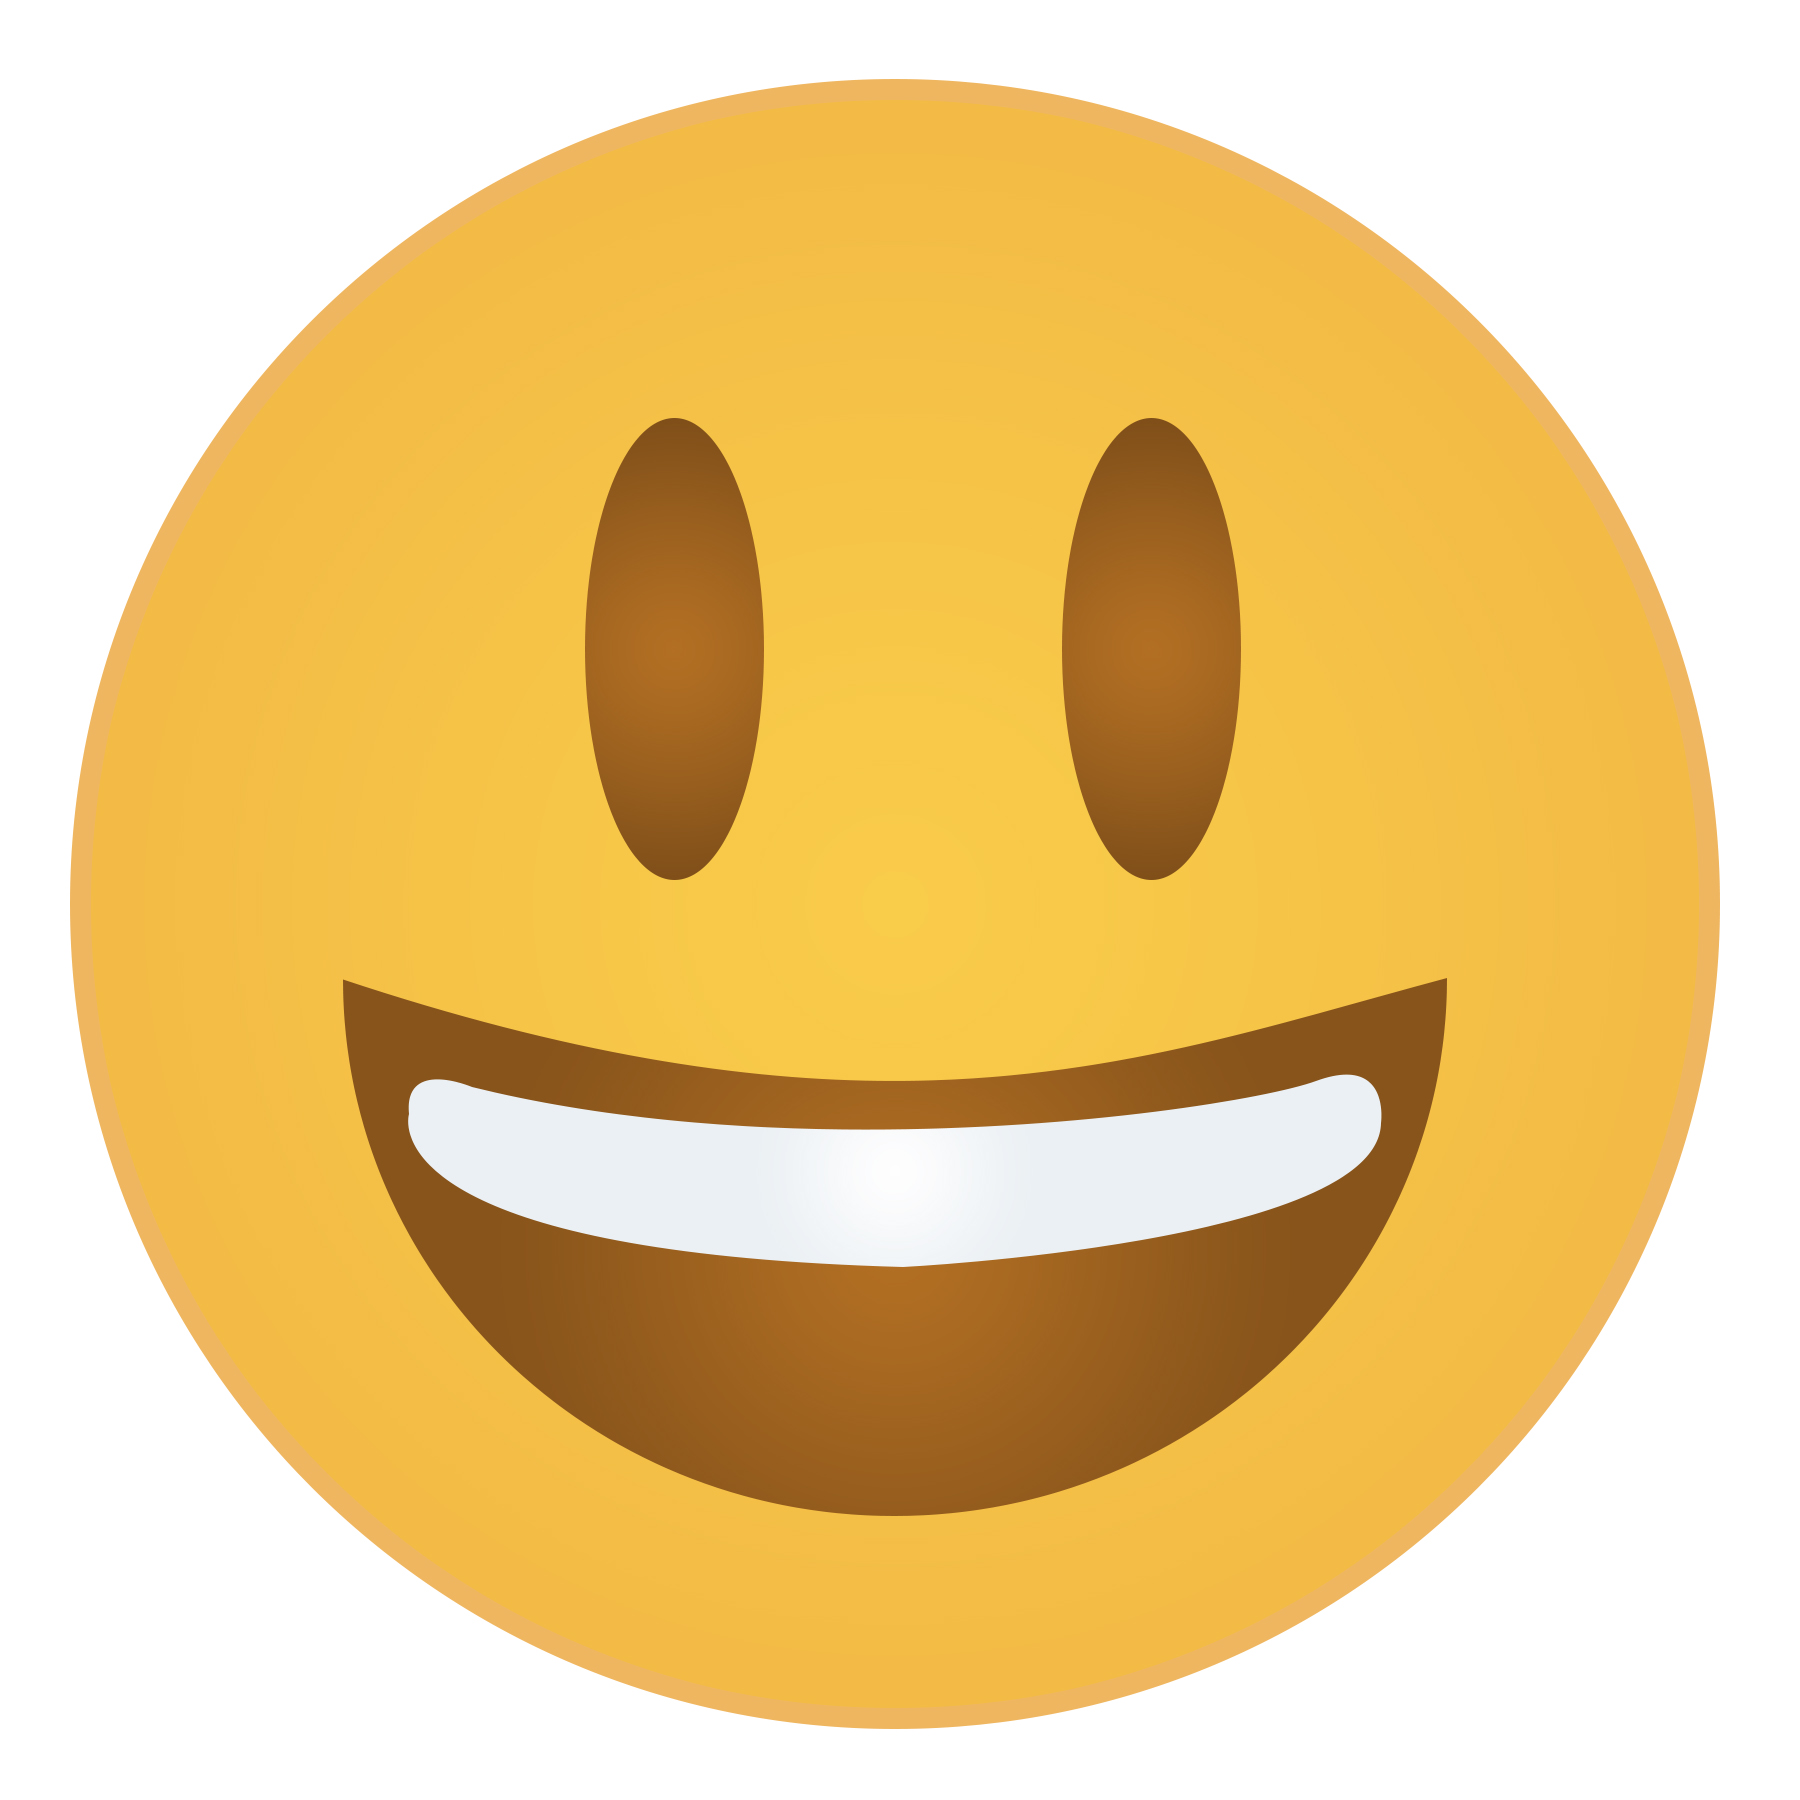 3 Cool Emoji DIYs With Free Template